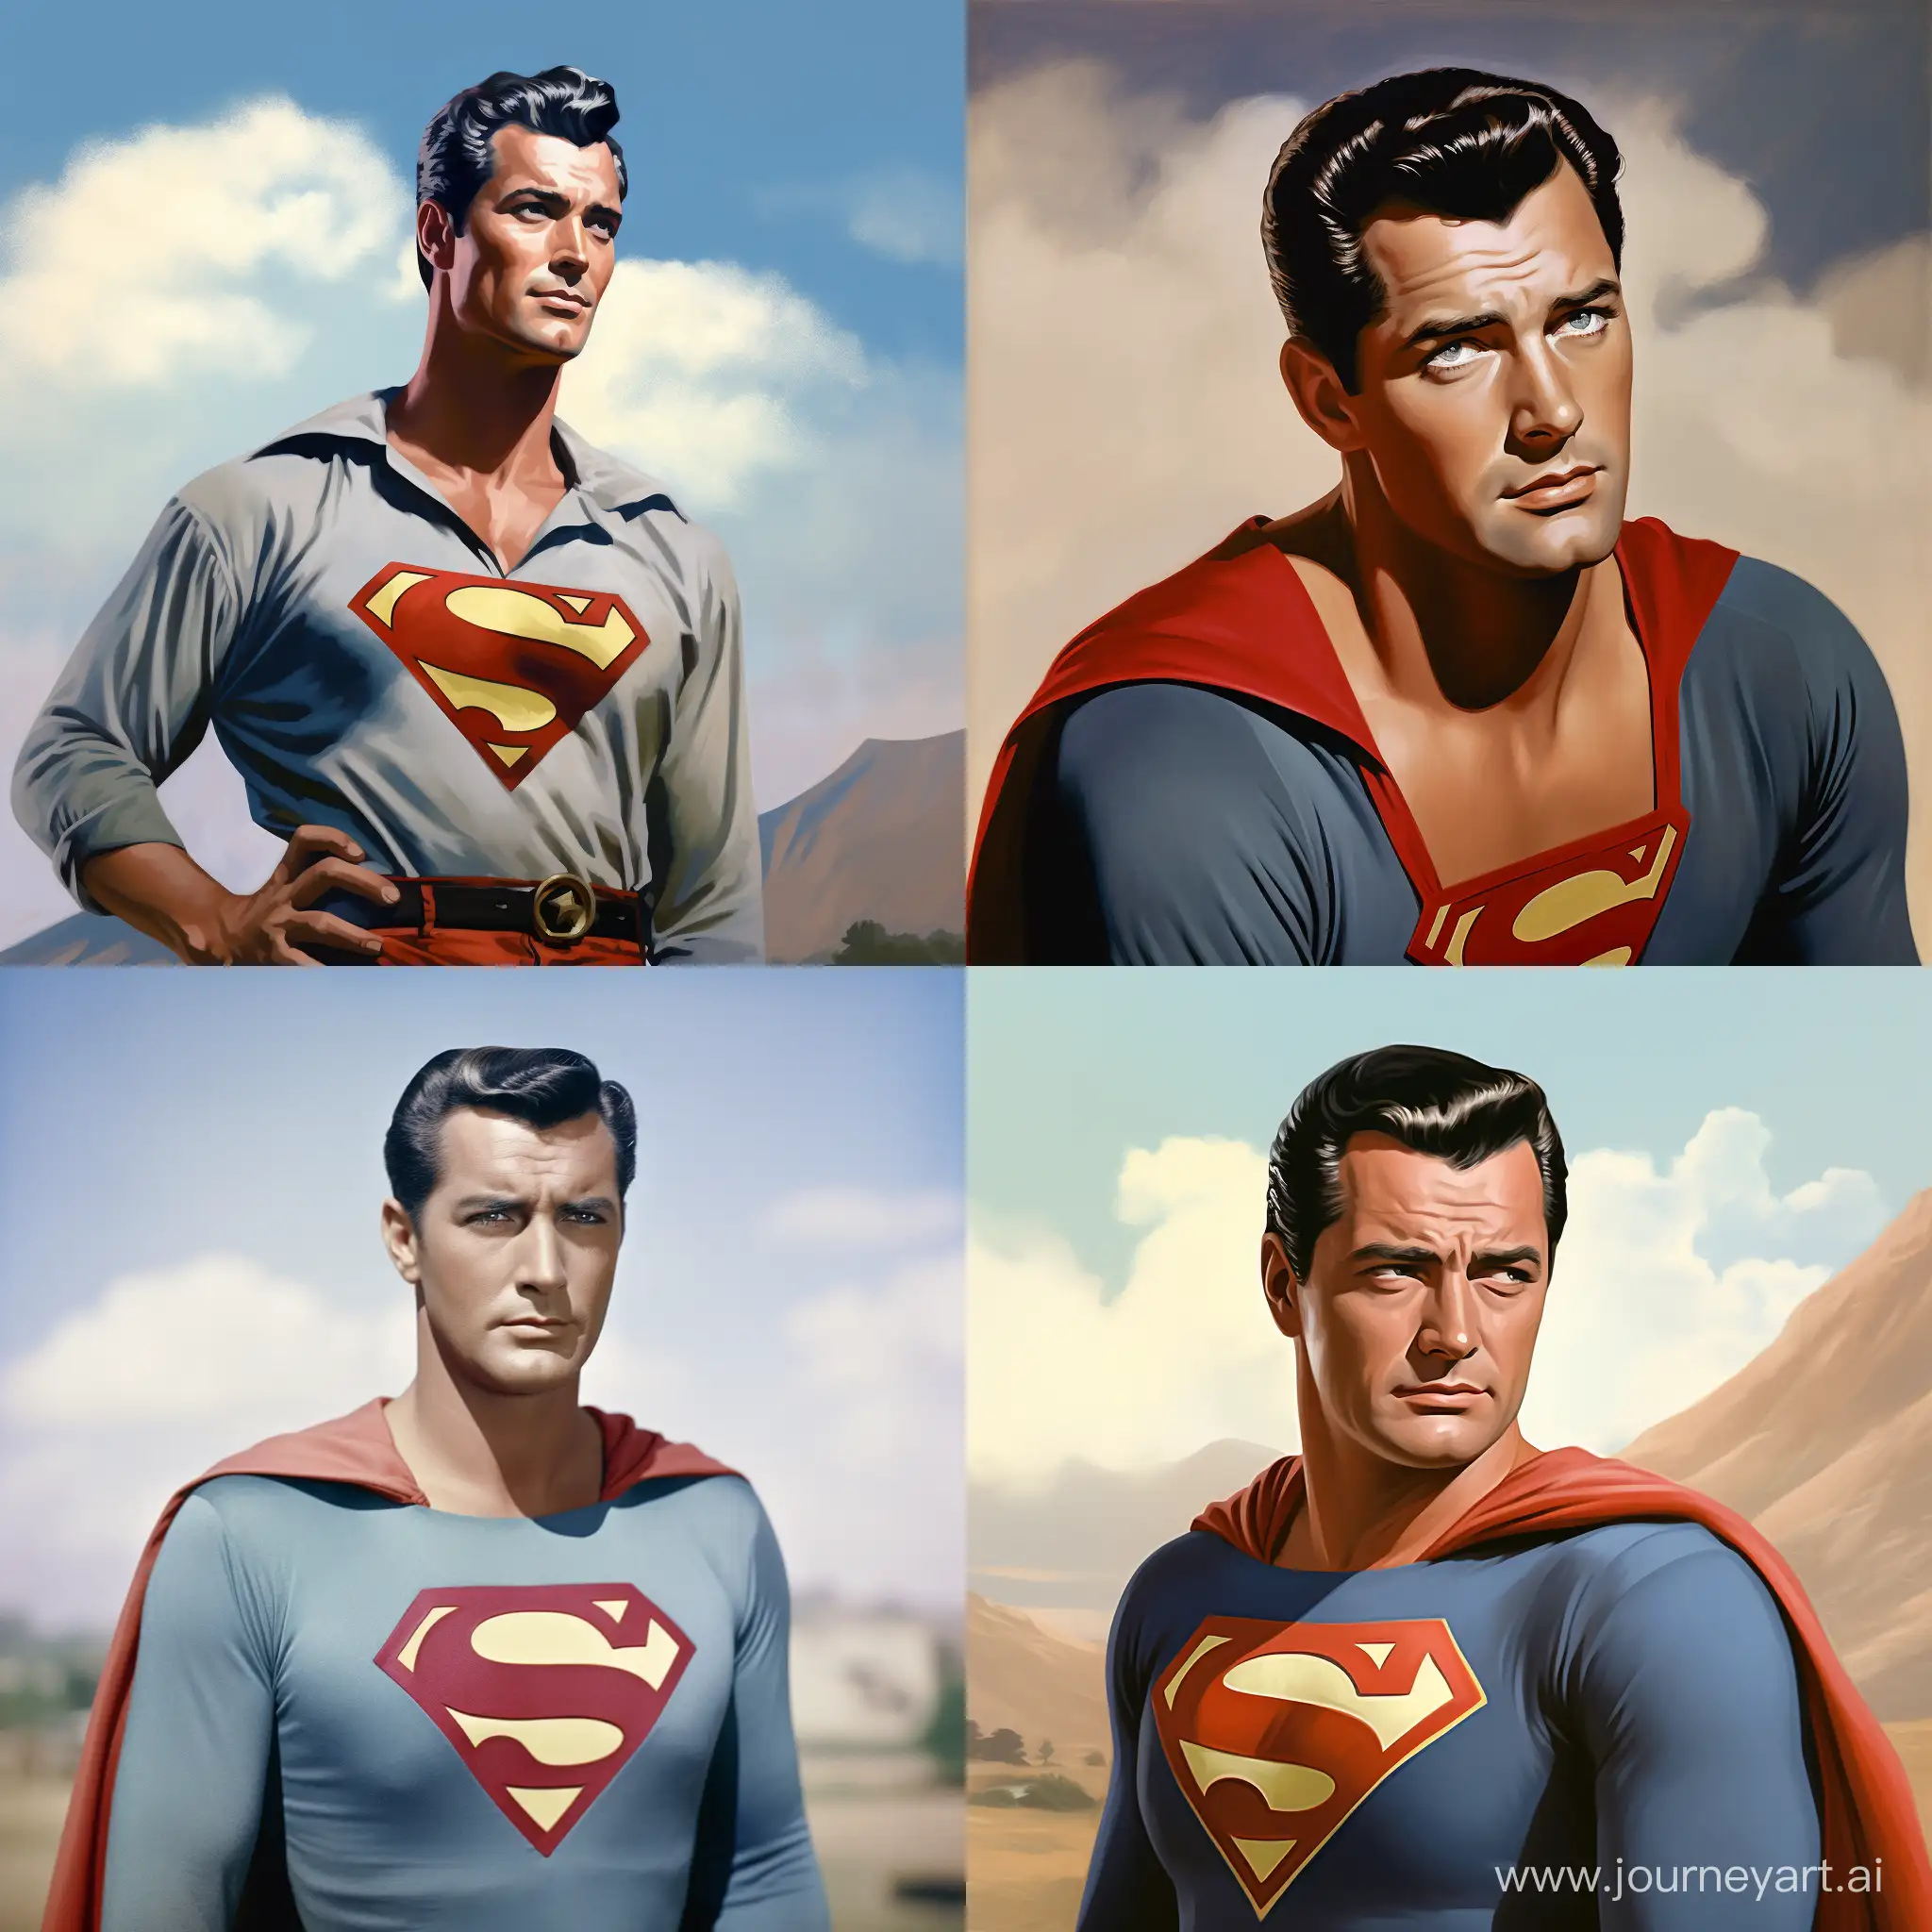 Rock-Hudson-Portrays-Superman-in-Stunning-Artwork